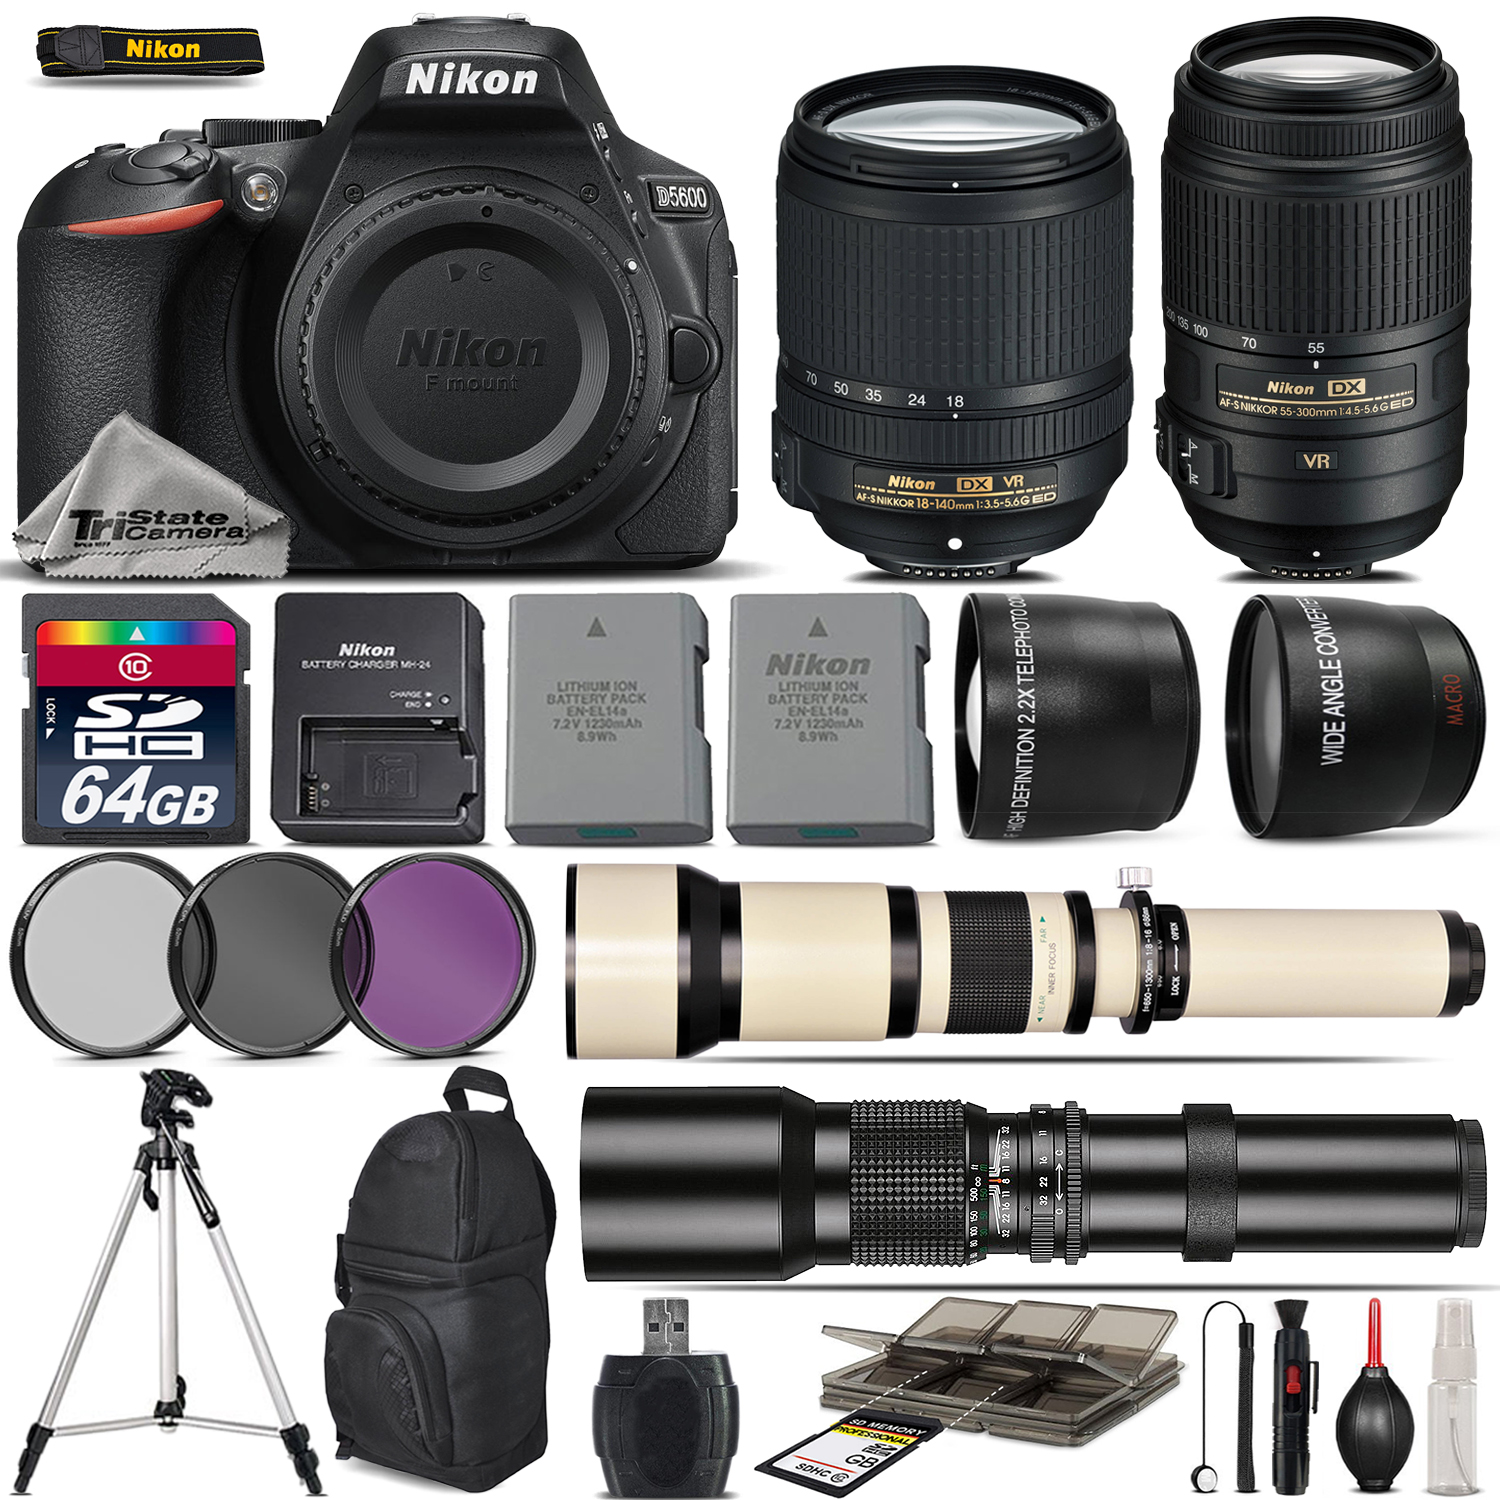 Nikon D5600 DSLR Camera with 18-140mm Lens 1577 B&H Photo Video